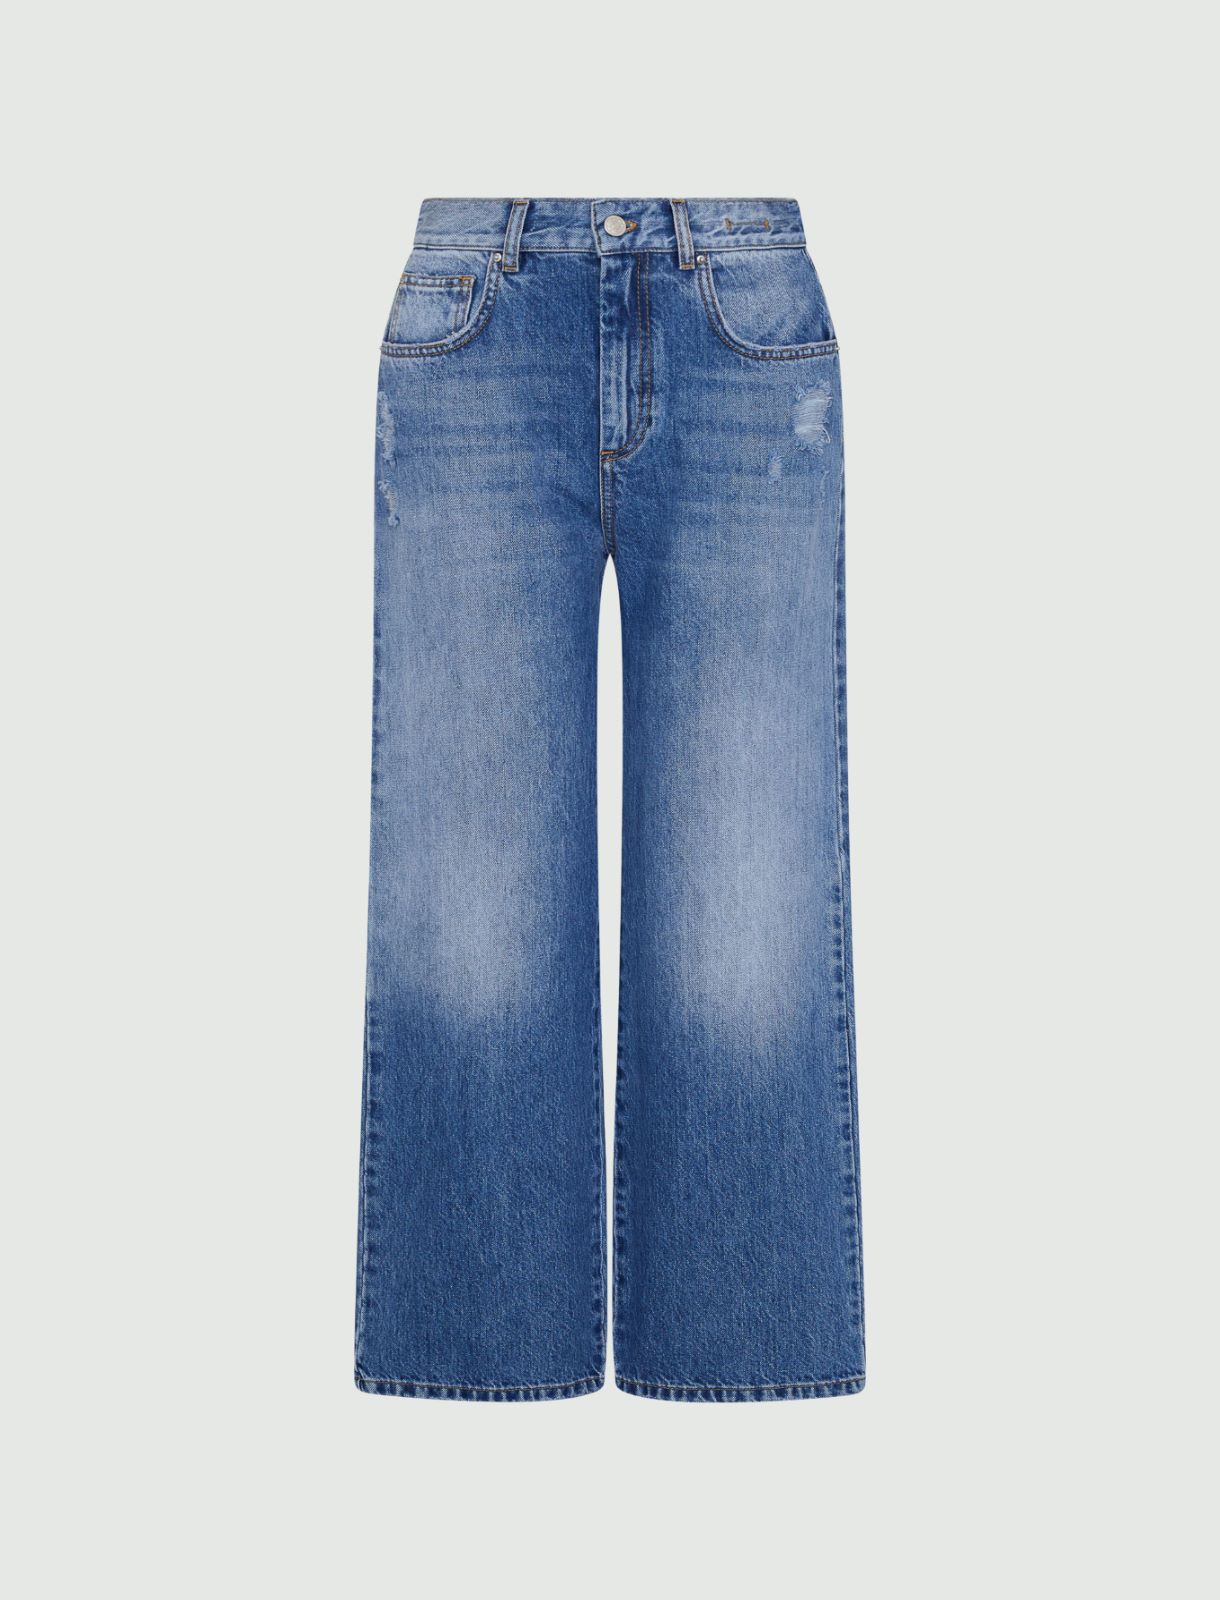 Jeans wide leg - Blue jeans - Marella - 6